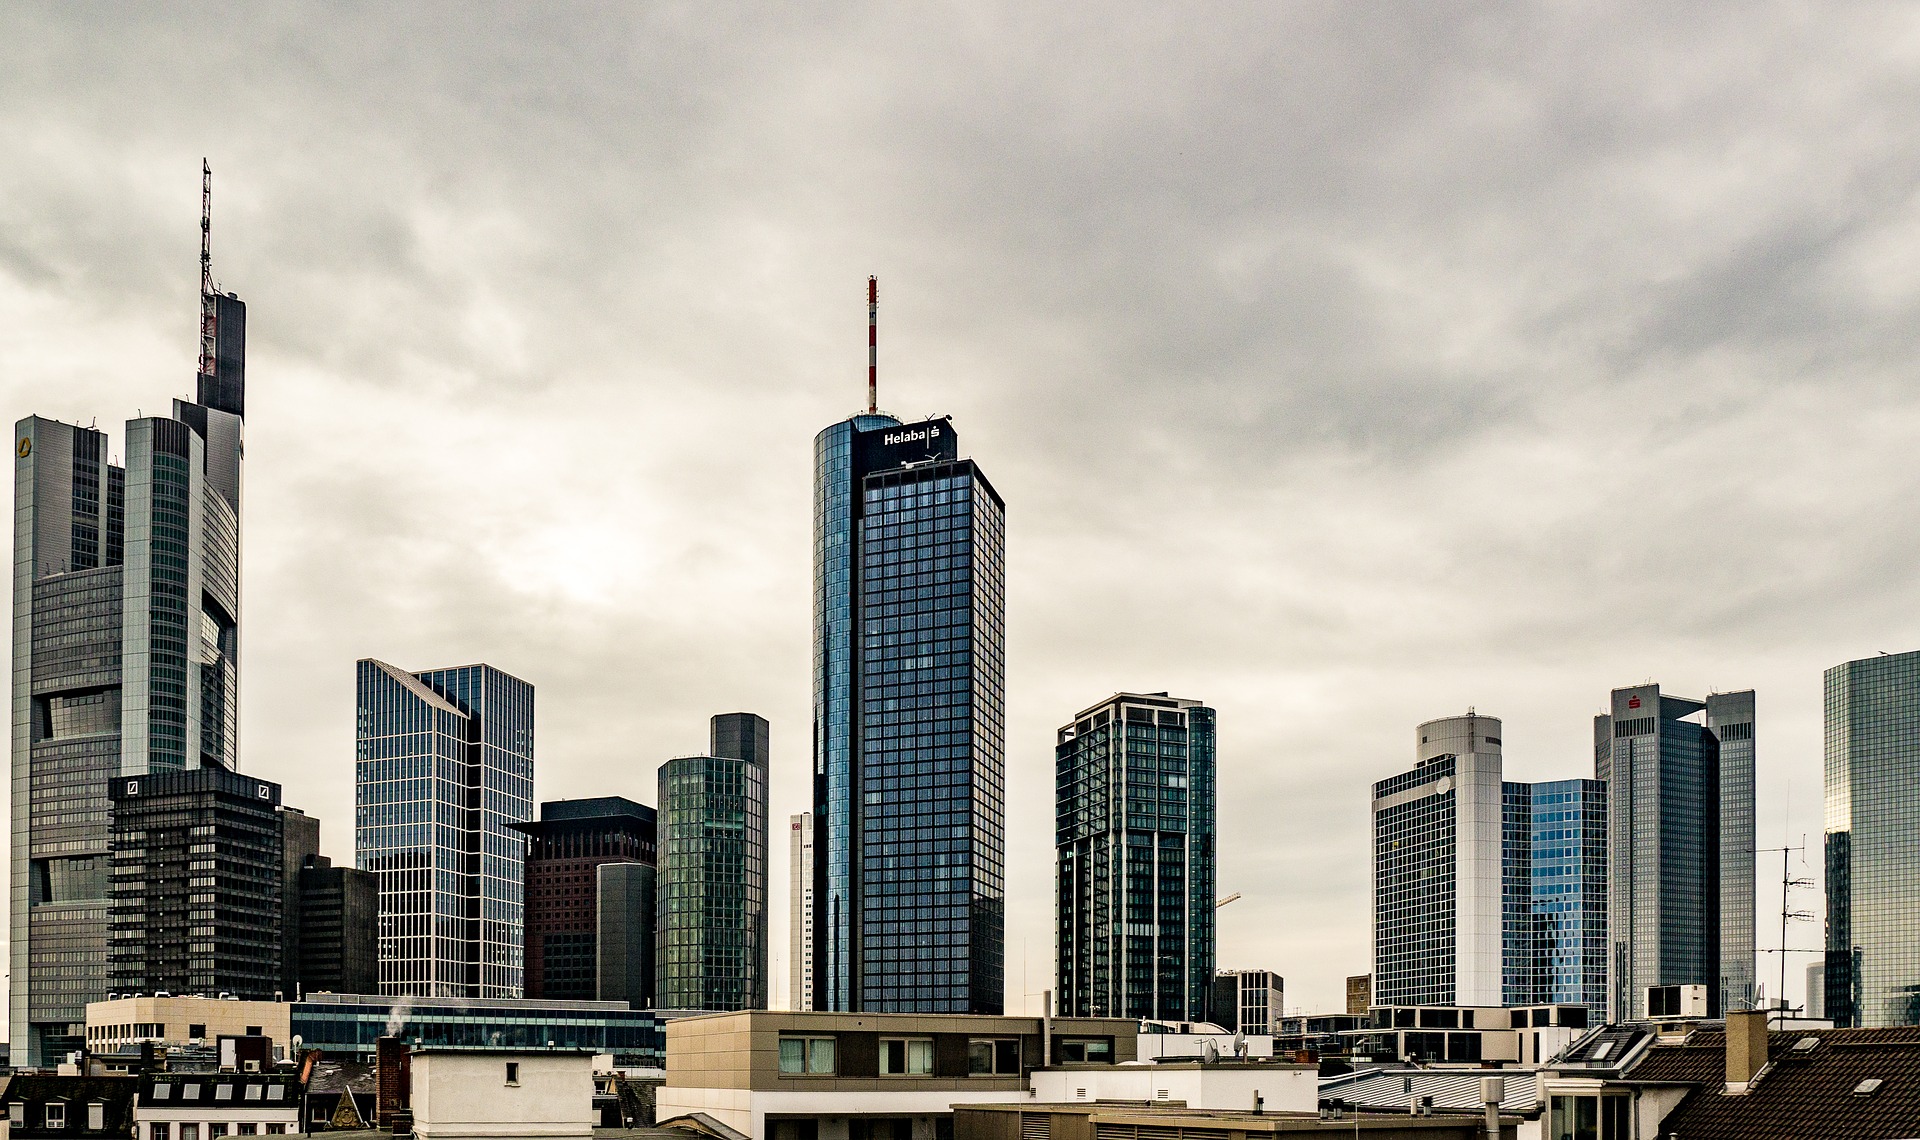 Stadt Frankfurt